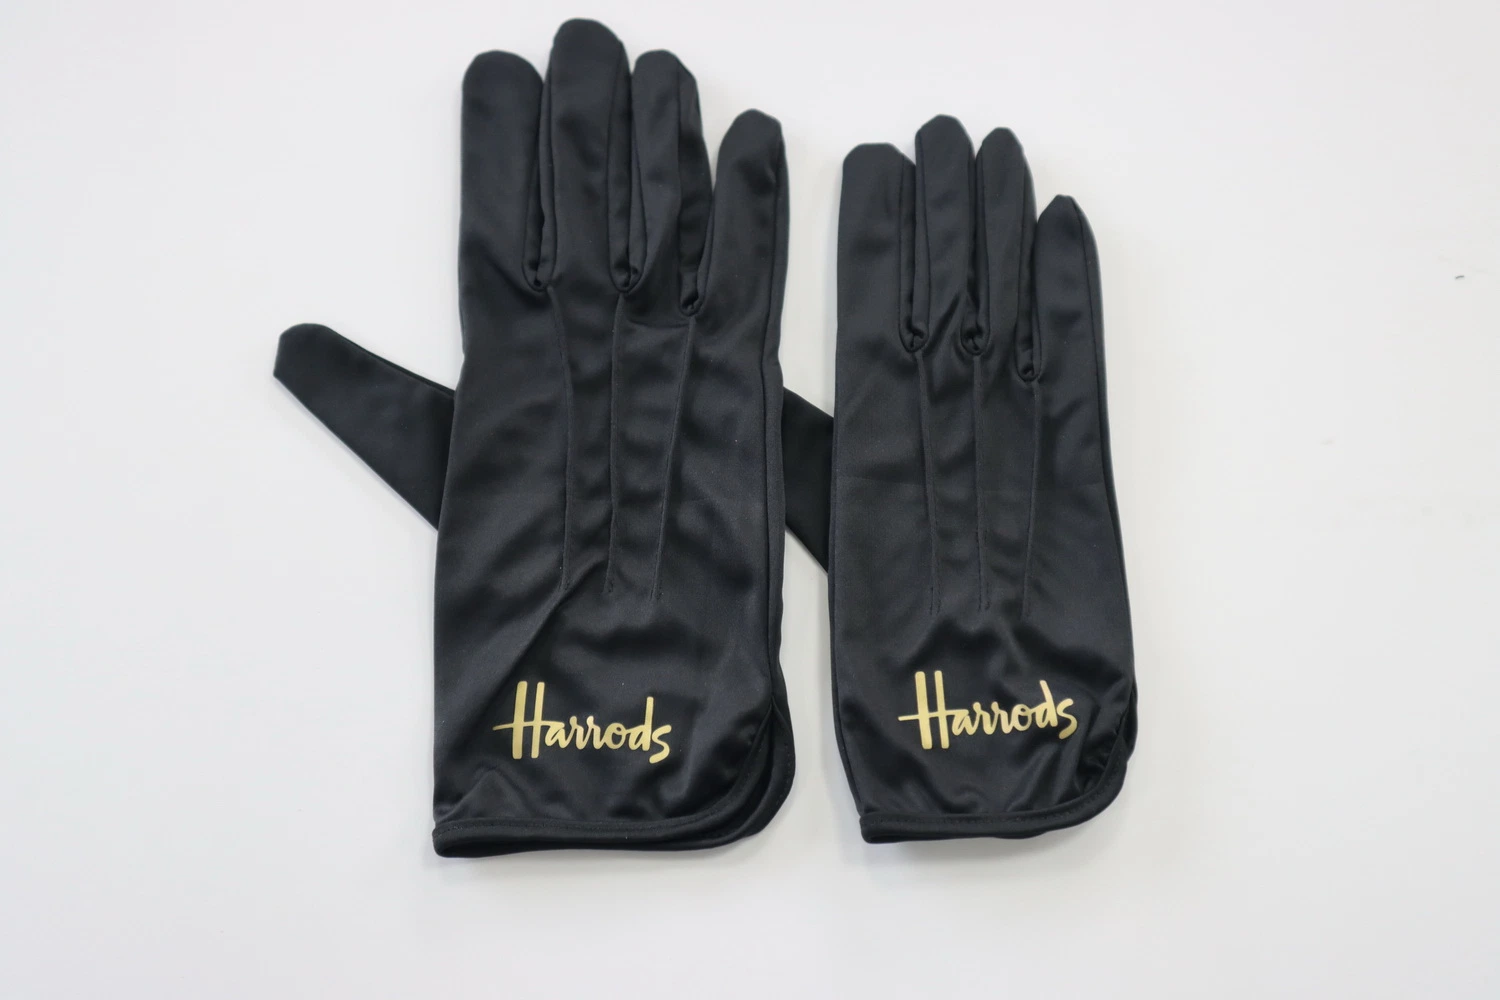 Gants en microfibre gants de nettoyage pour bijoux gants anti-poussière gants